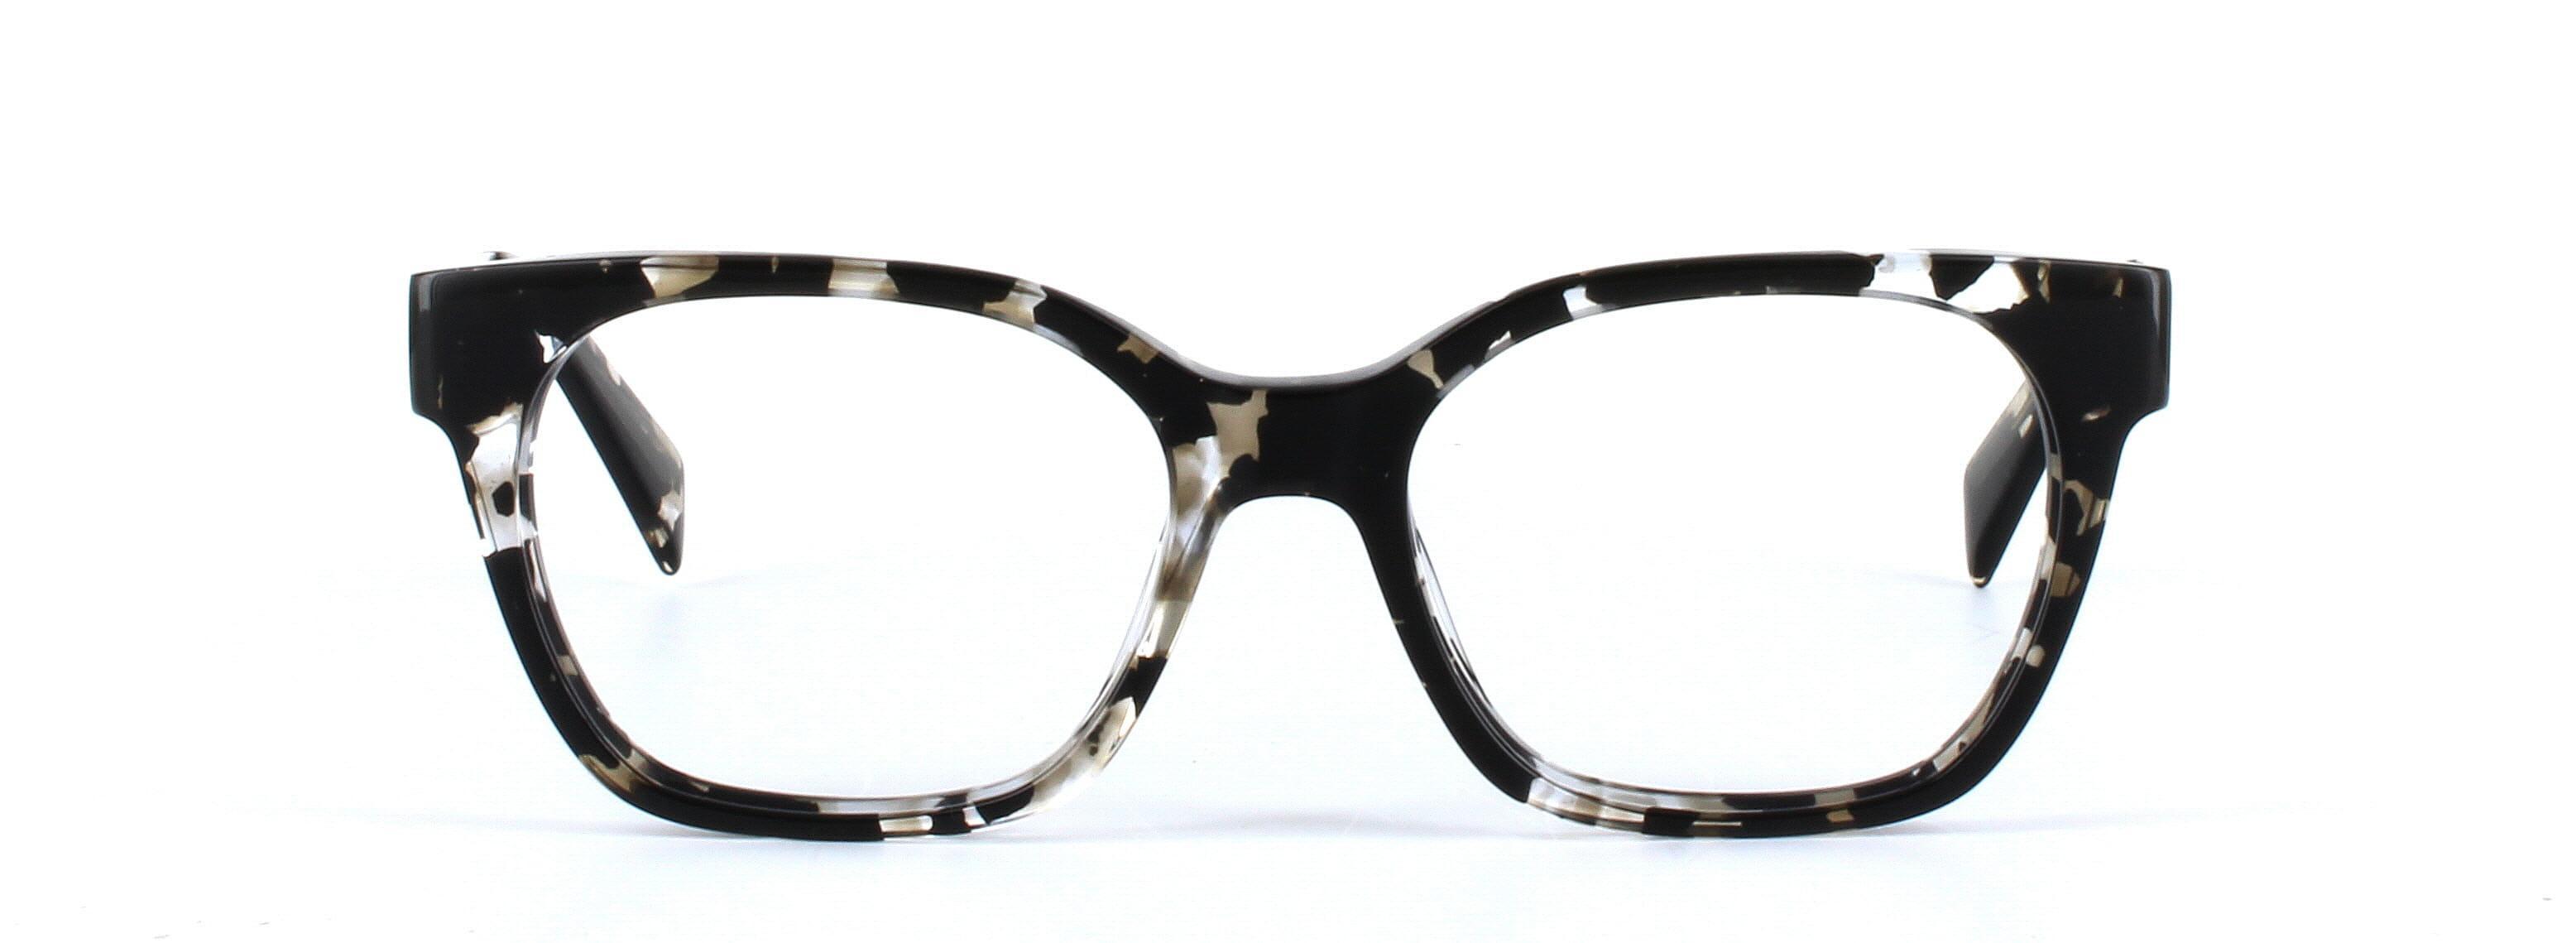 JUST CAVALLI (JC0801-055) Black/Brown Full Rim Square Acetate Glasses - Image View 5